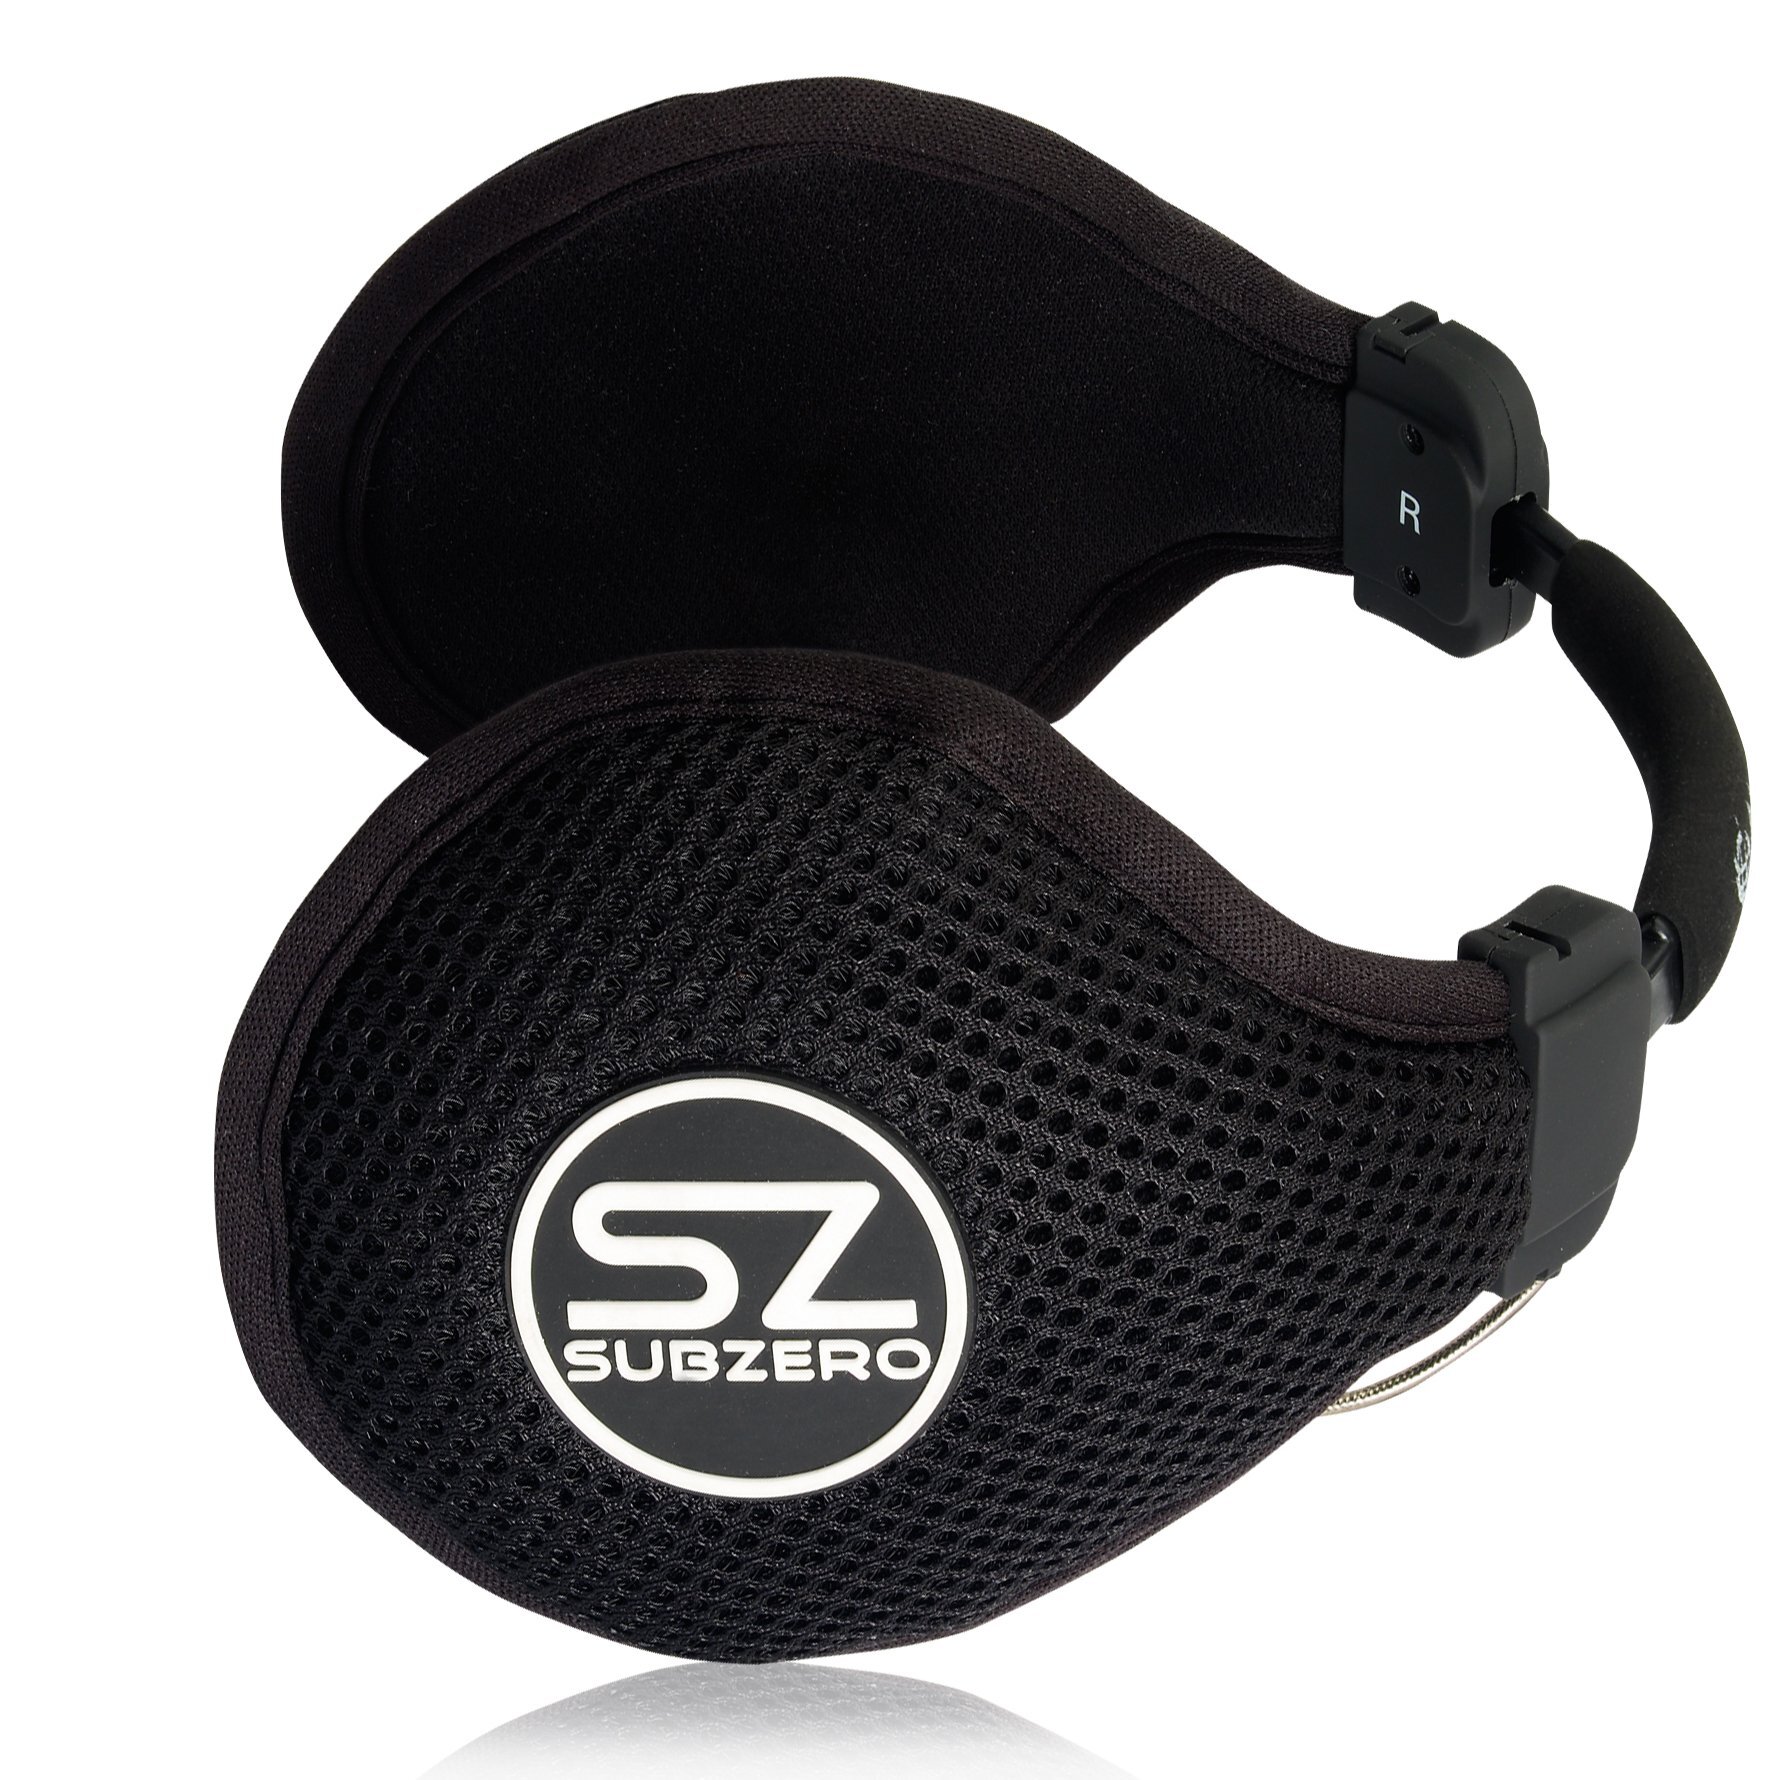 Midland SubZero Music Stereo Headphones Built In Ear muffs Black zwart